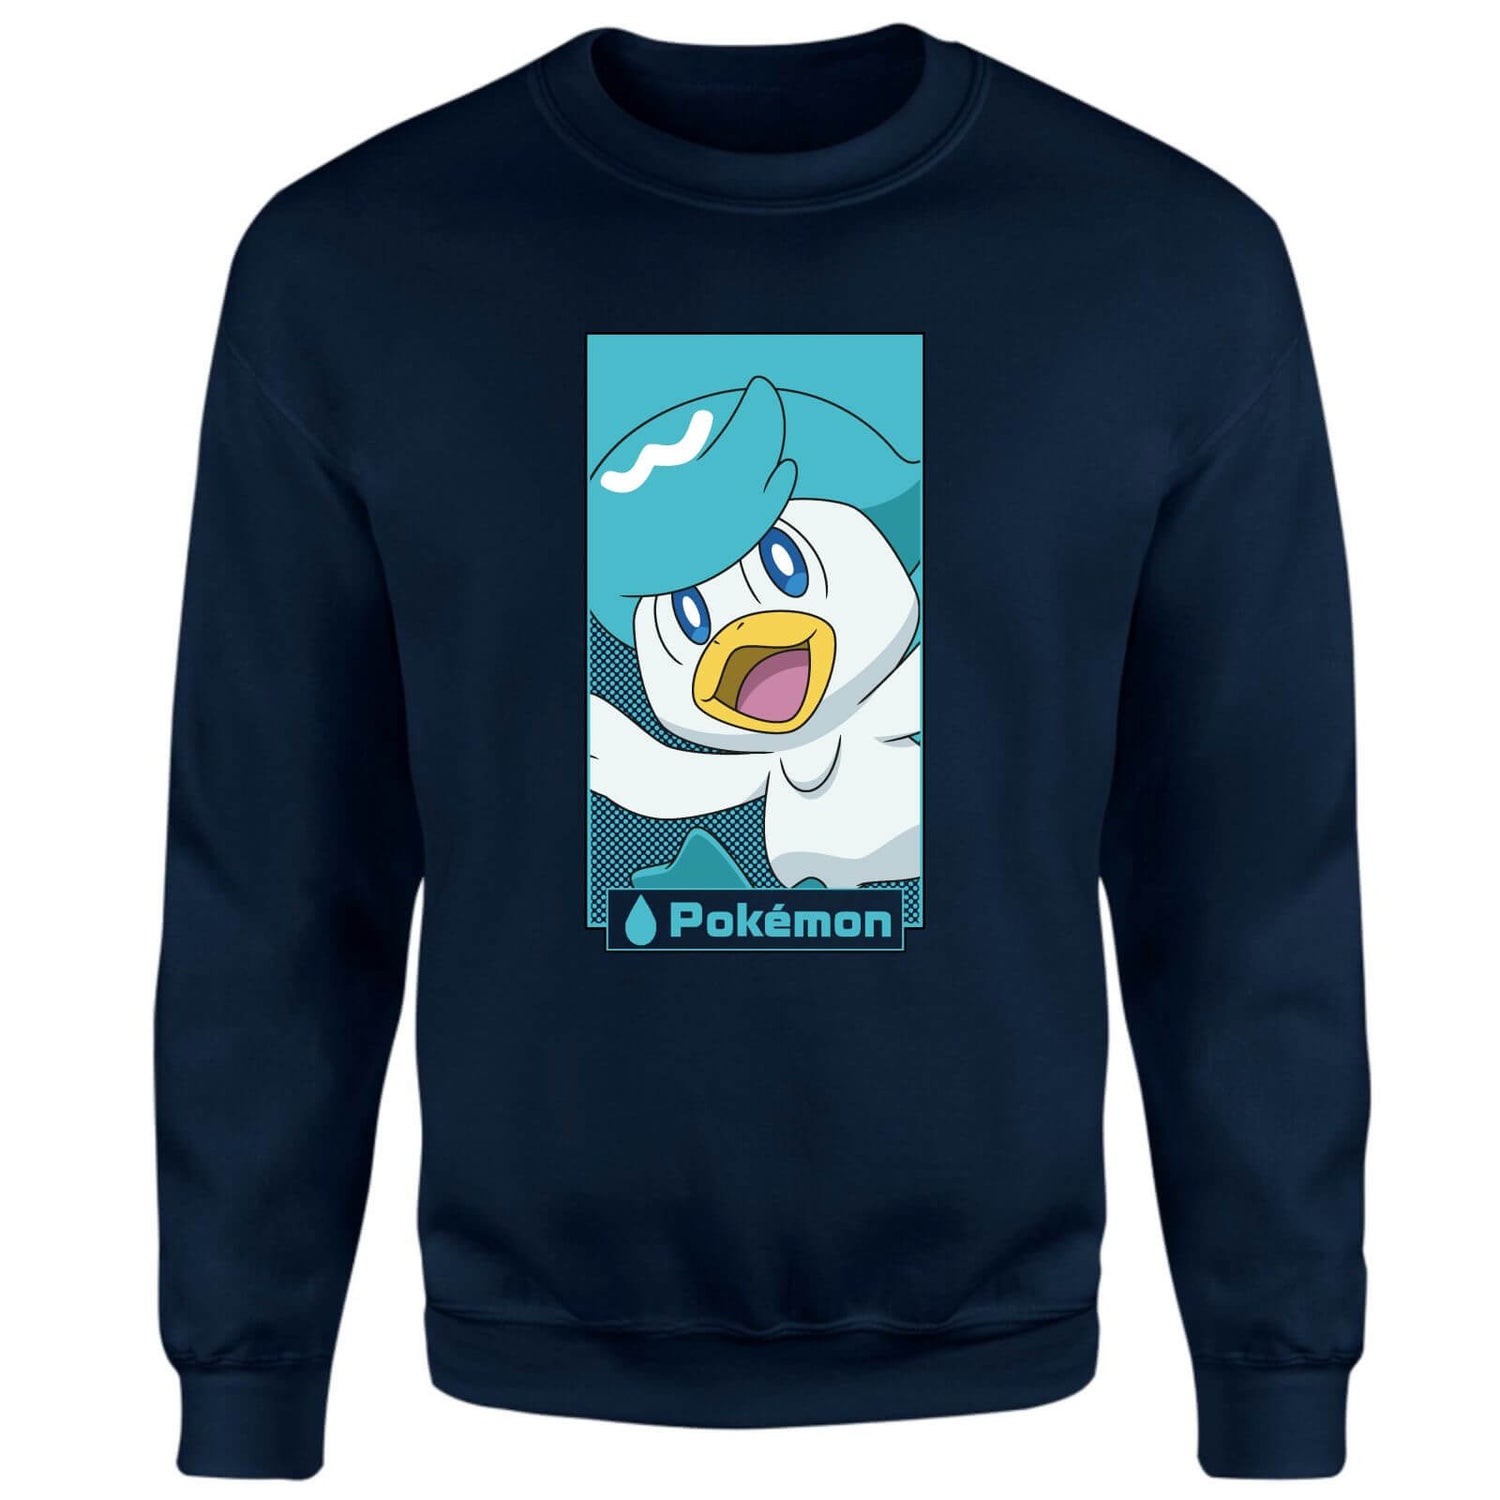 Pokémon Quaxly Sweatshirt - Navy